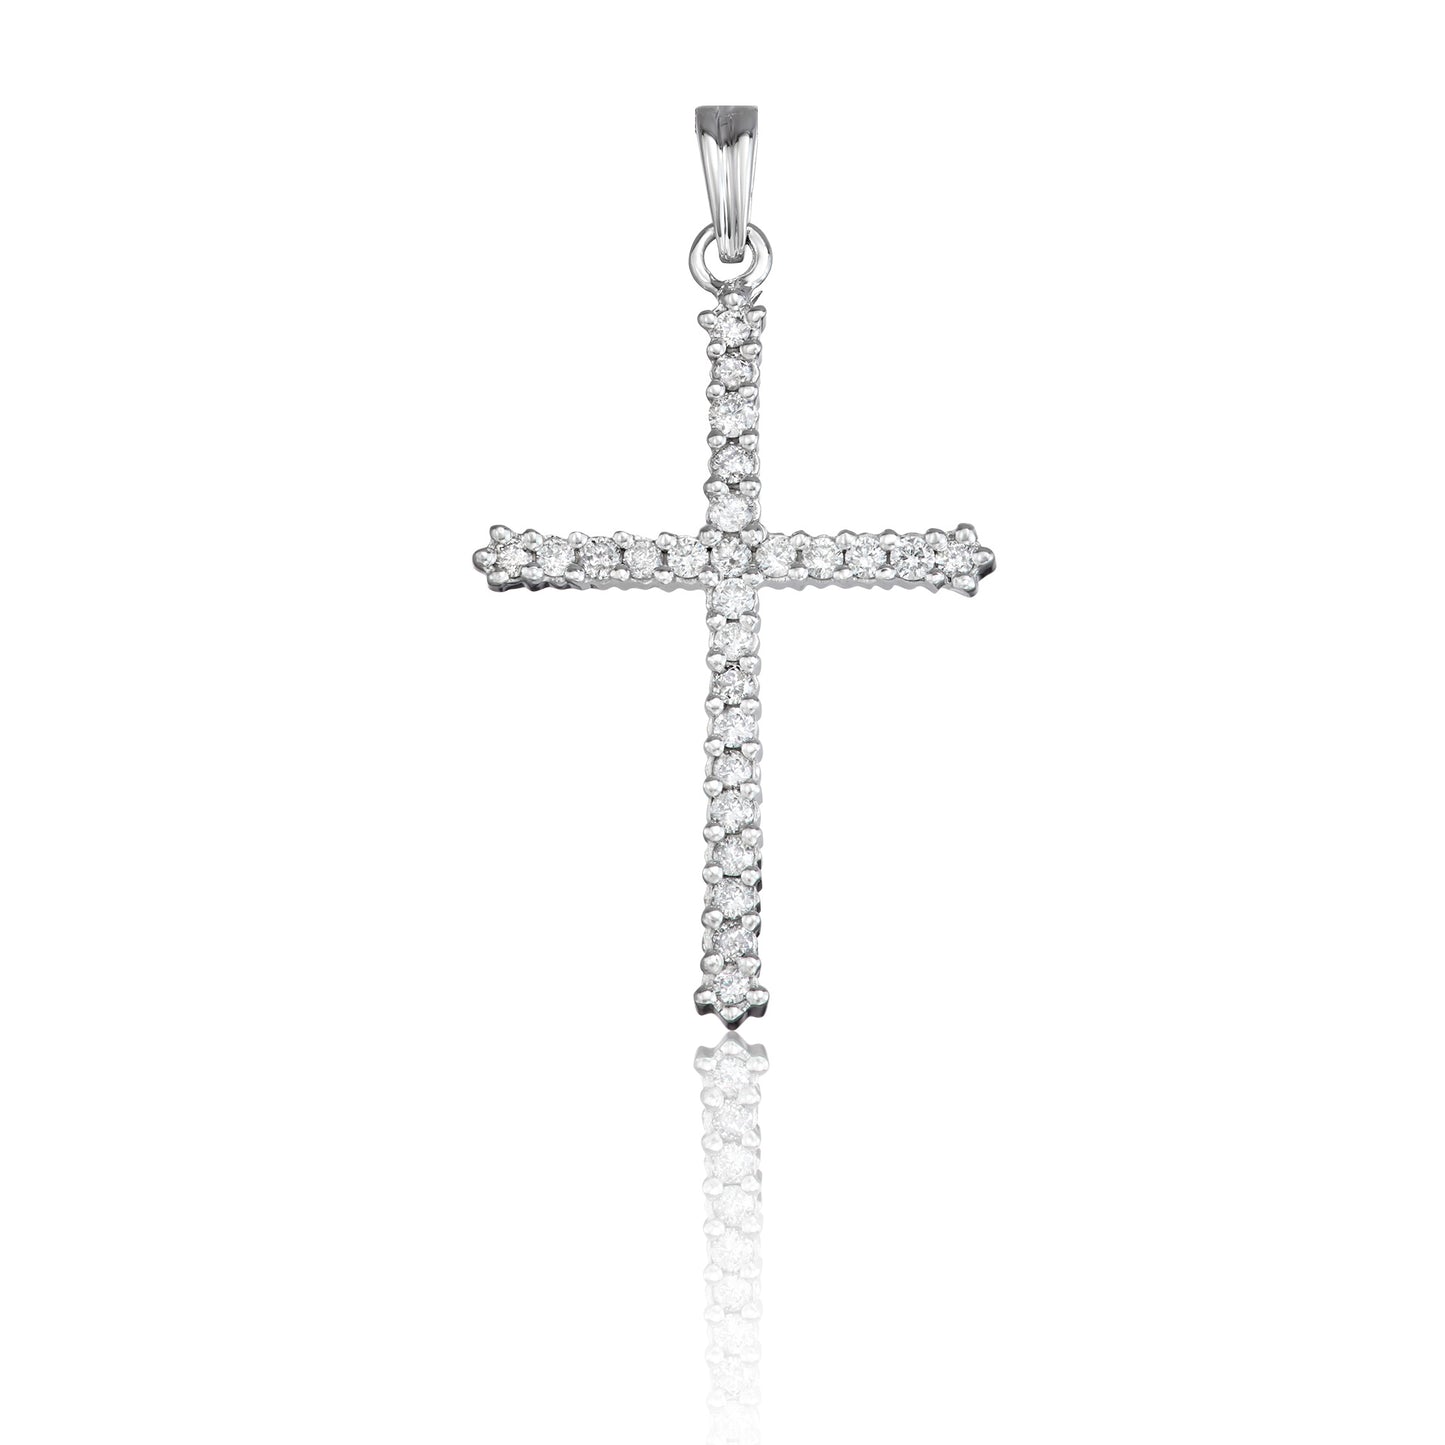 10k White Gold 0.50 ct TDW White Diamond Cross Necklace